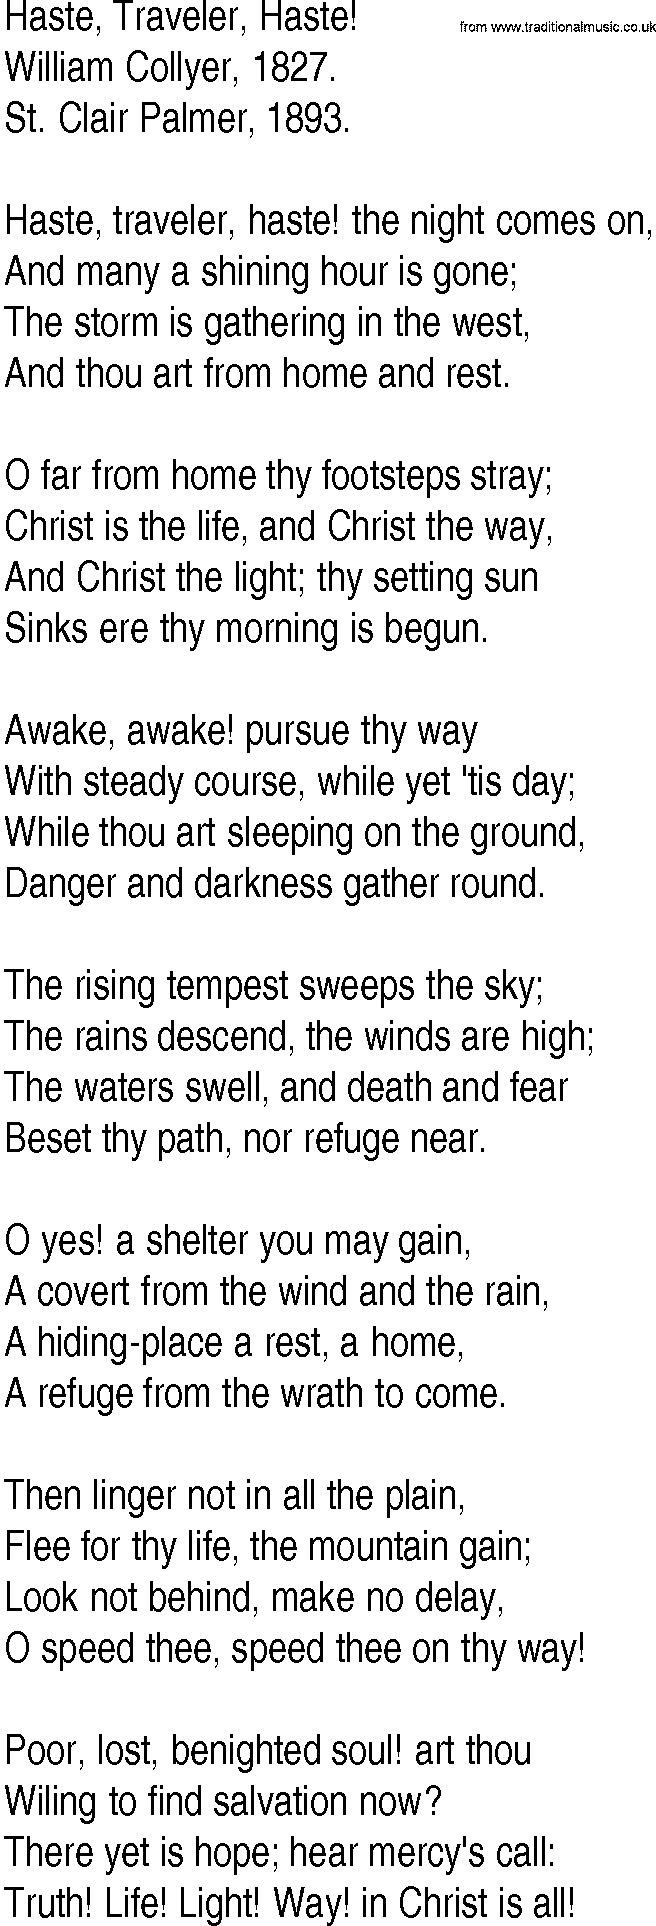 Hymn and Gospel Song: Haste, Traveler, Haste! by William Collyer lyrics